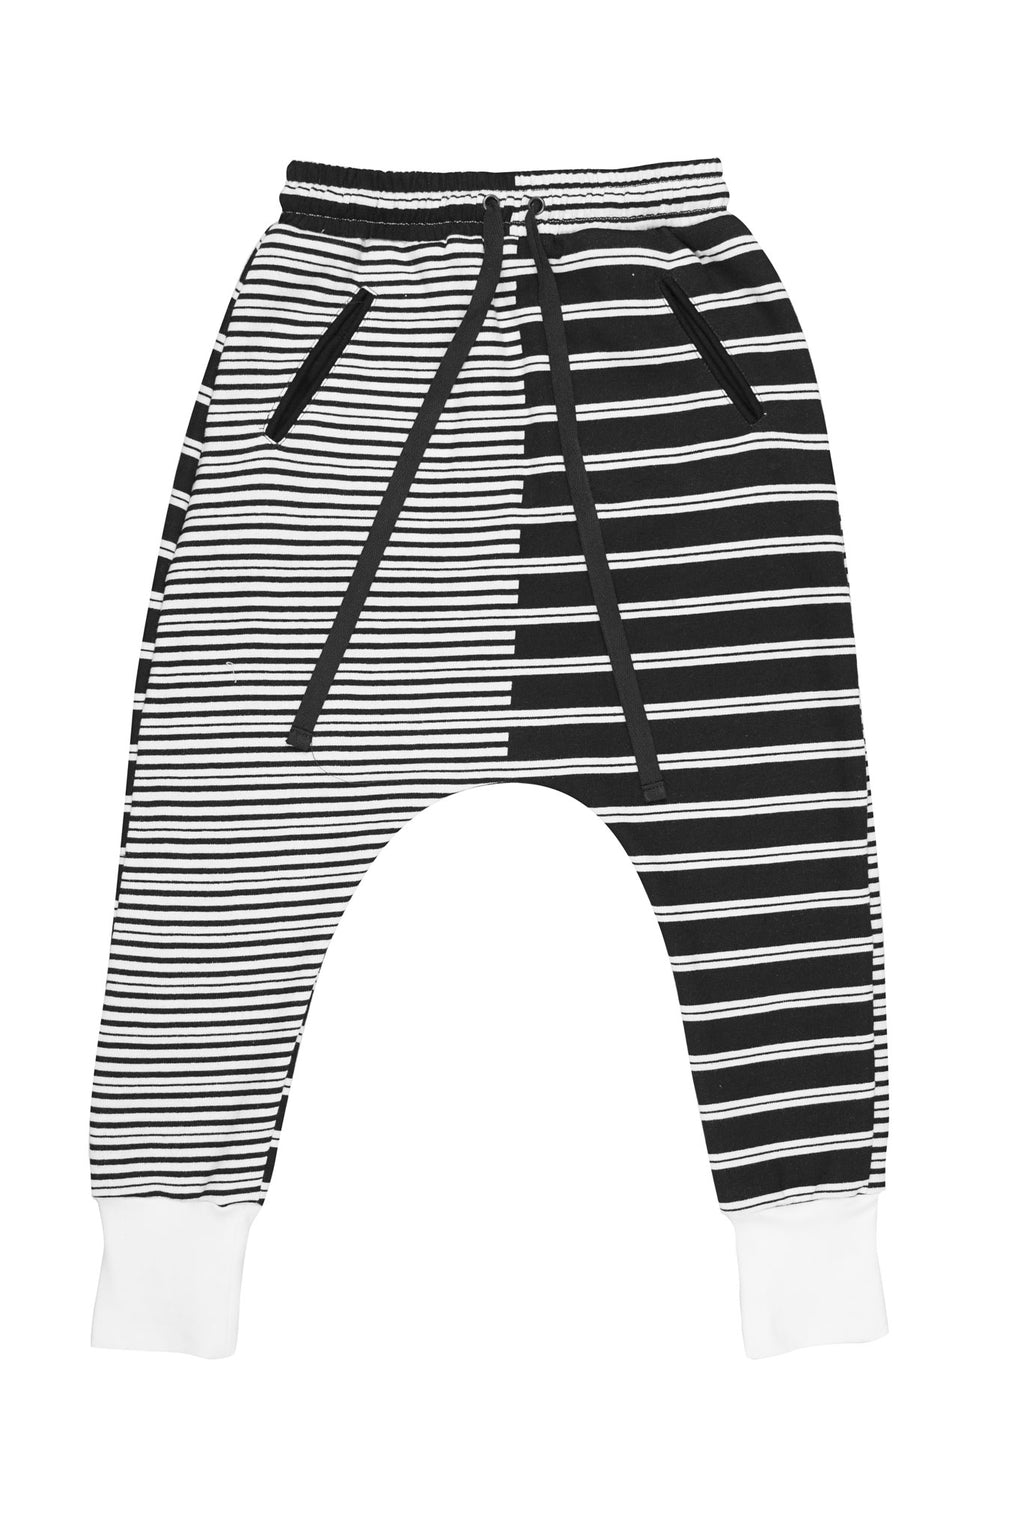 Lola 2 Stripes Trackie Black/White - Zuttion